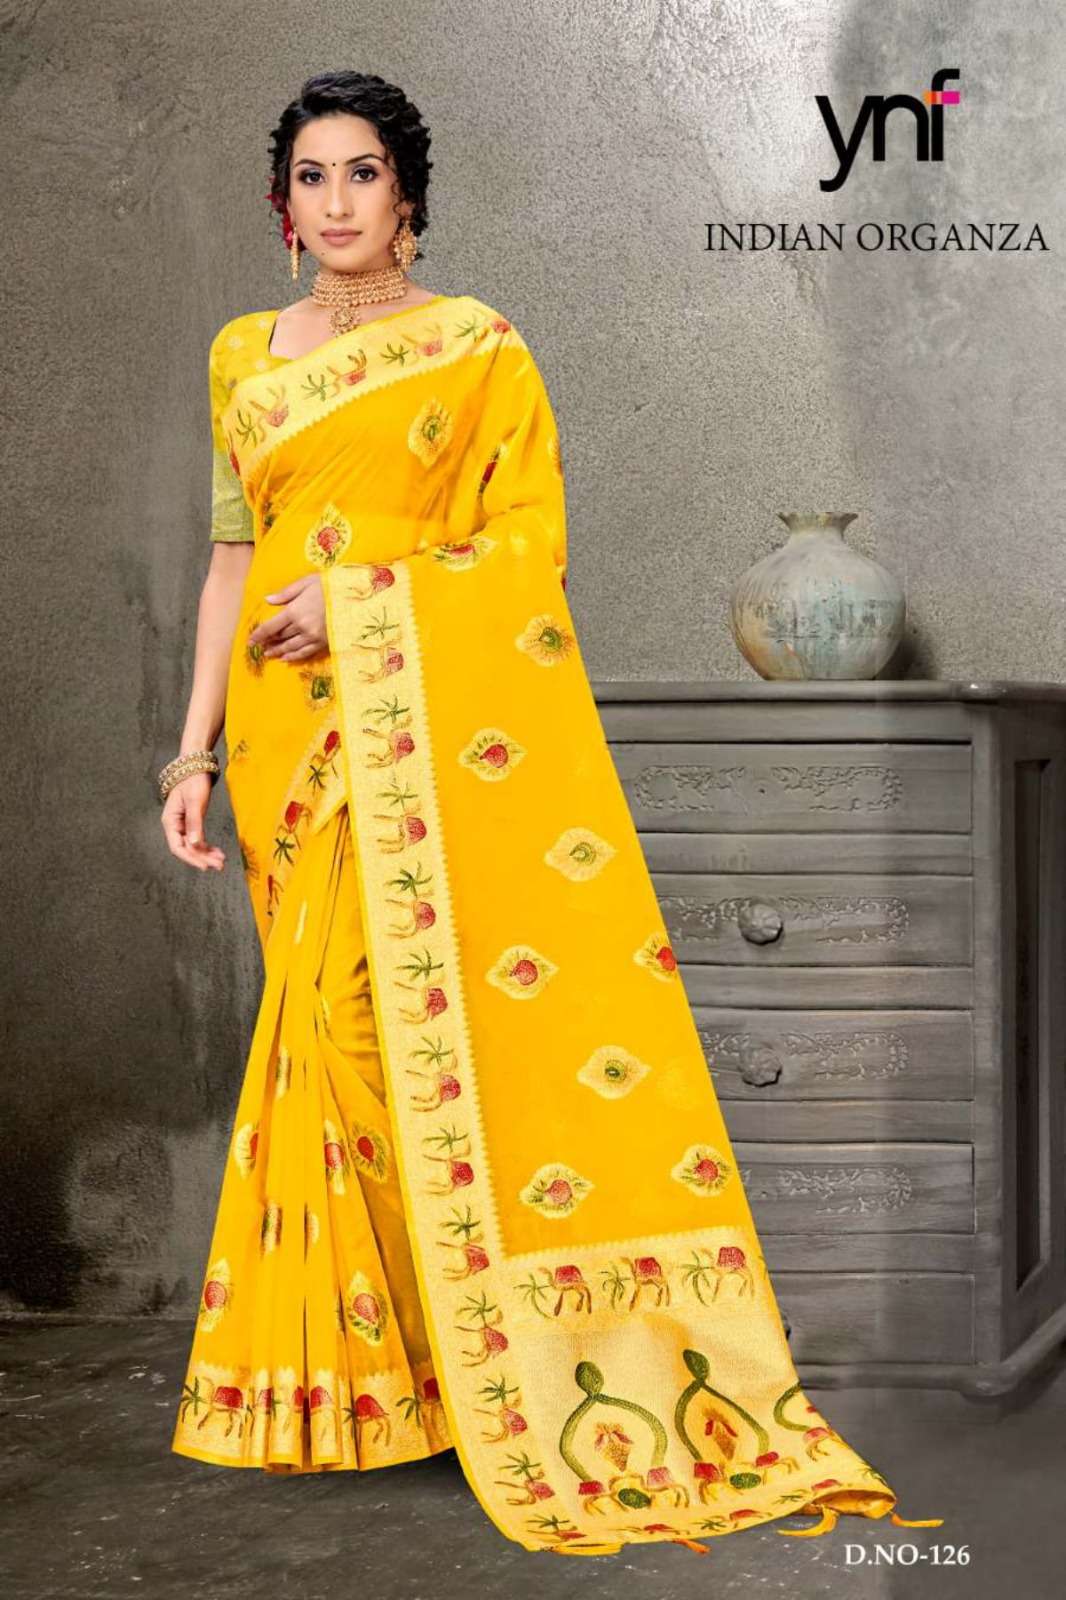 Ynf Indian Organza Woven Designer Saree Wholesale catalog